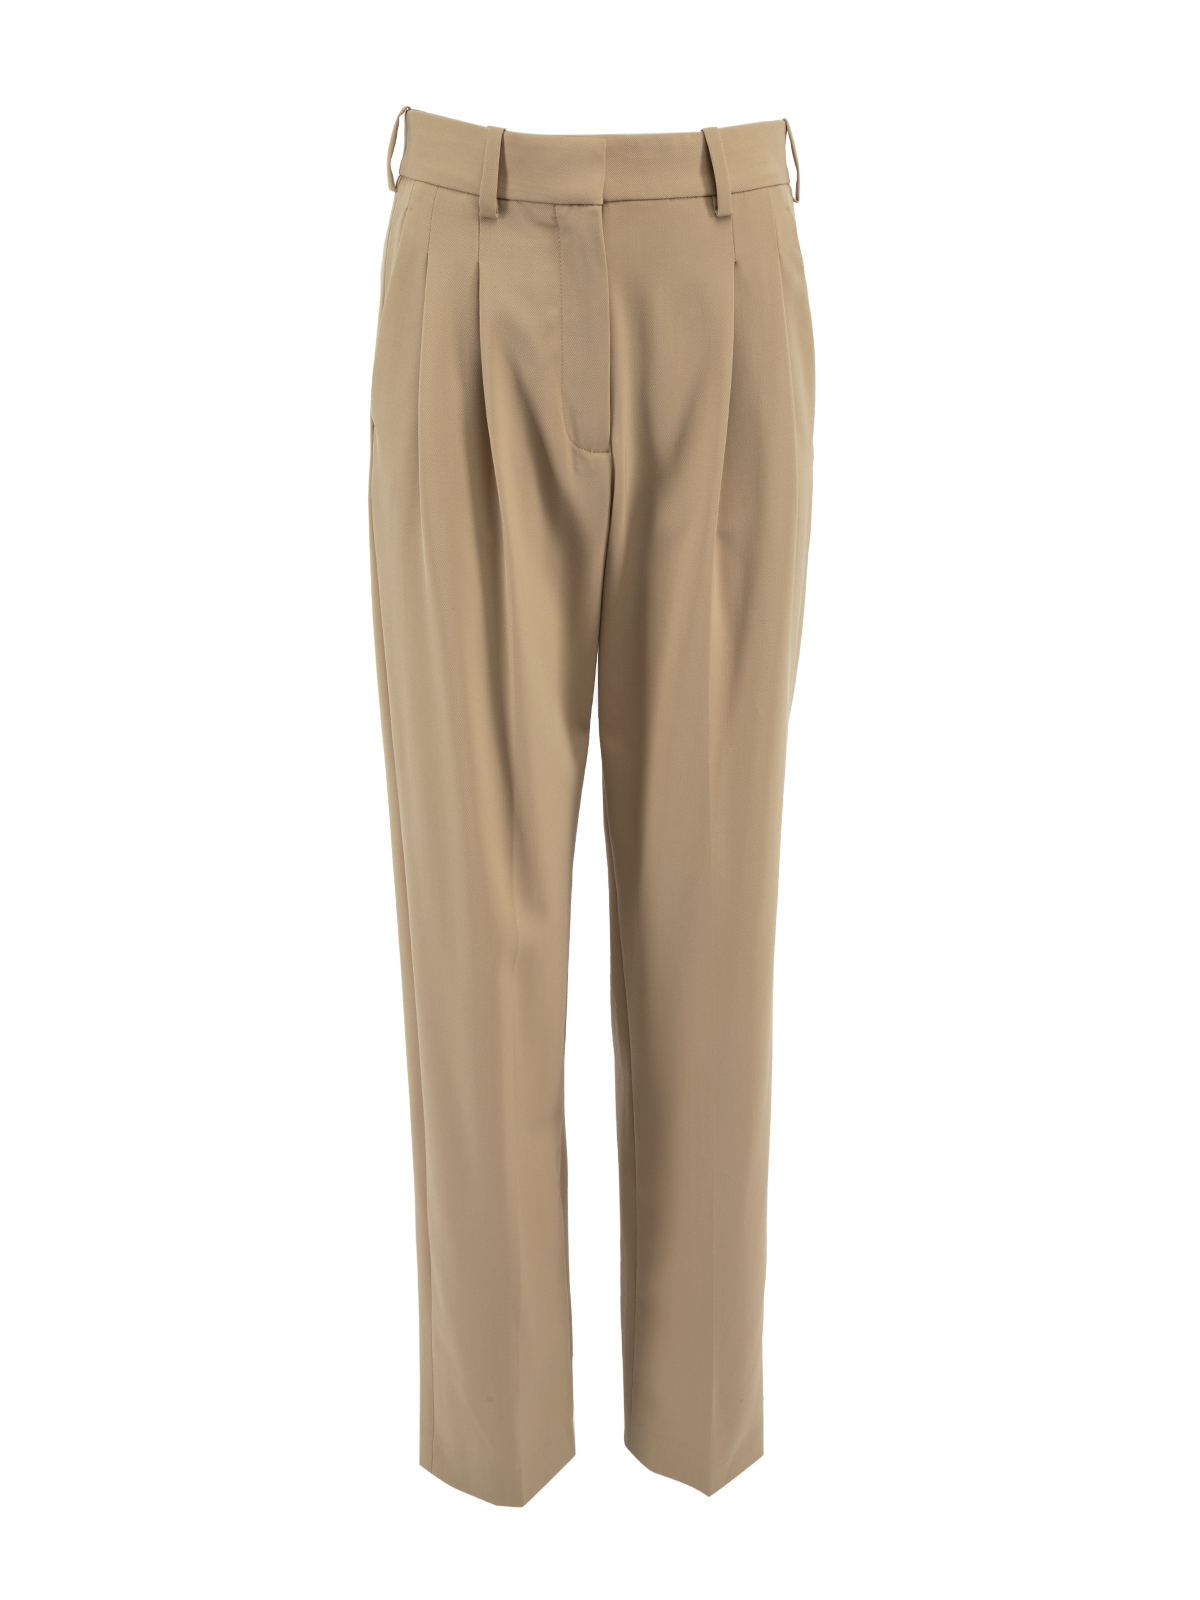 Stella McCartney Camel Tailored Trousers